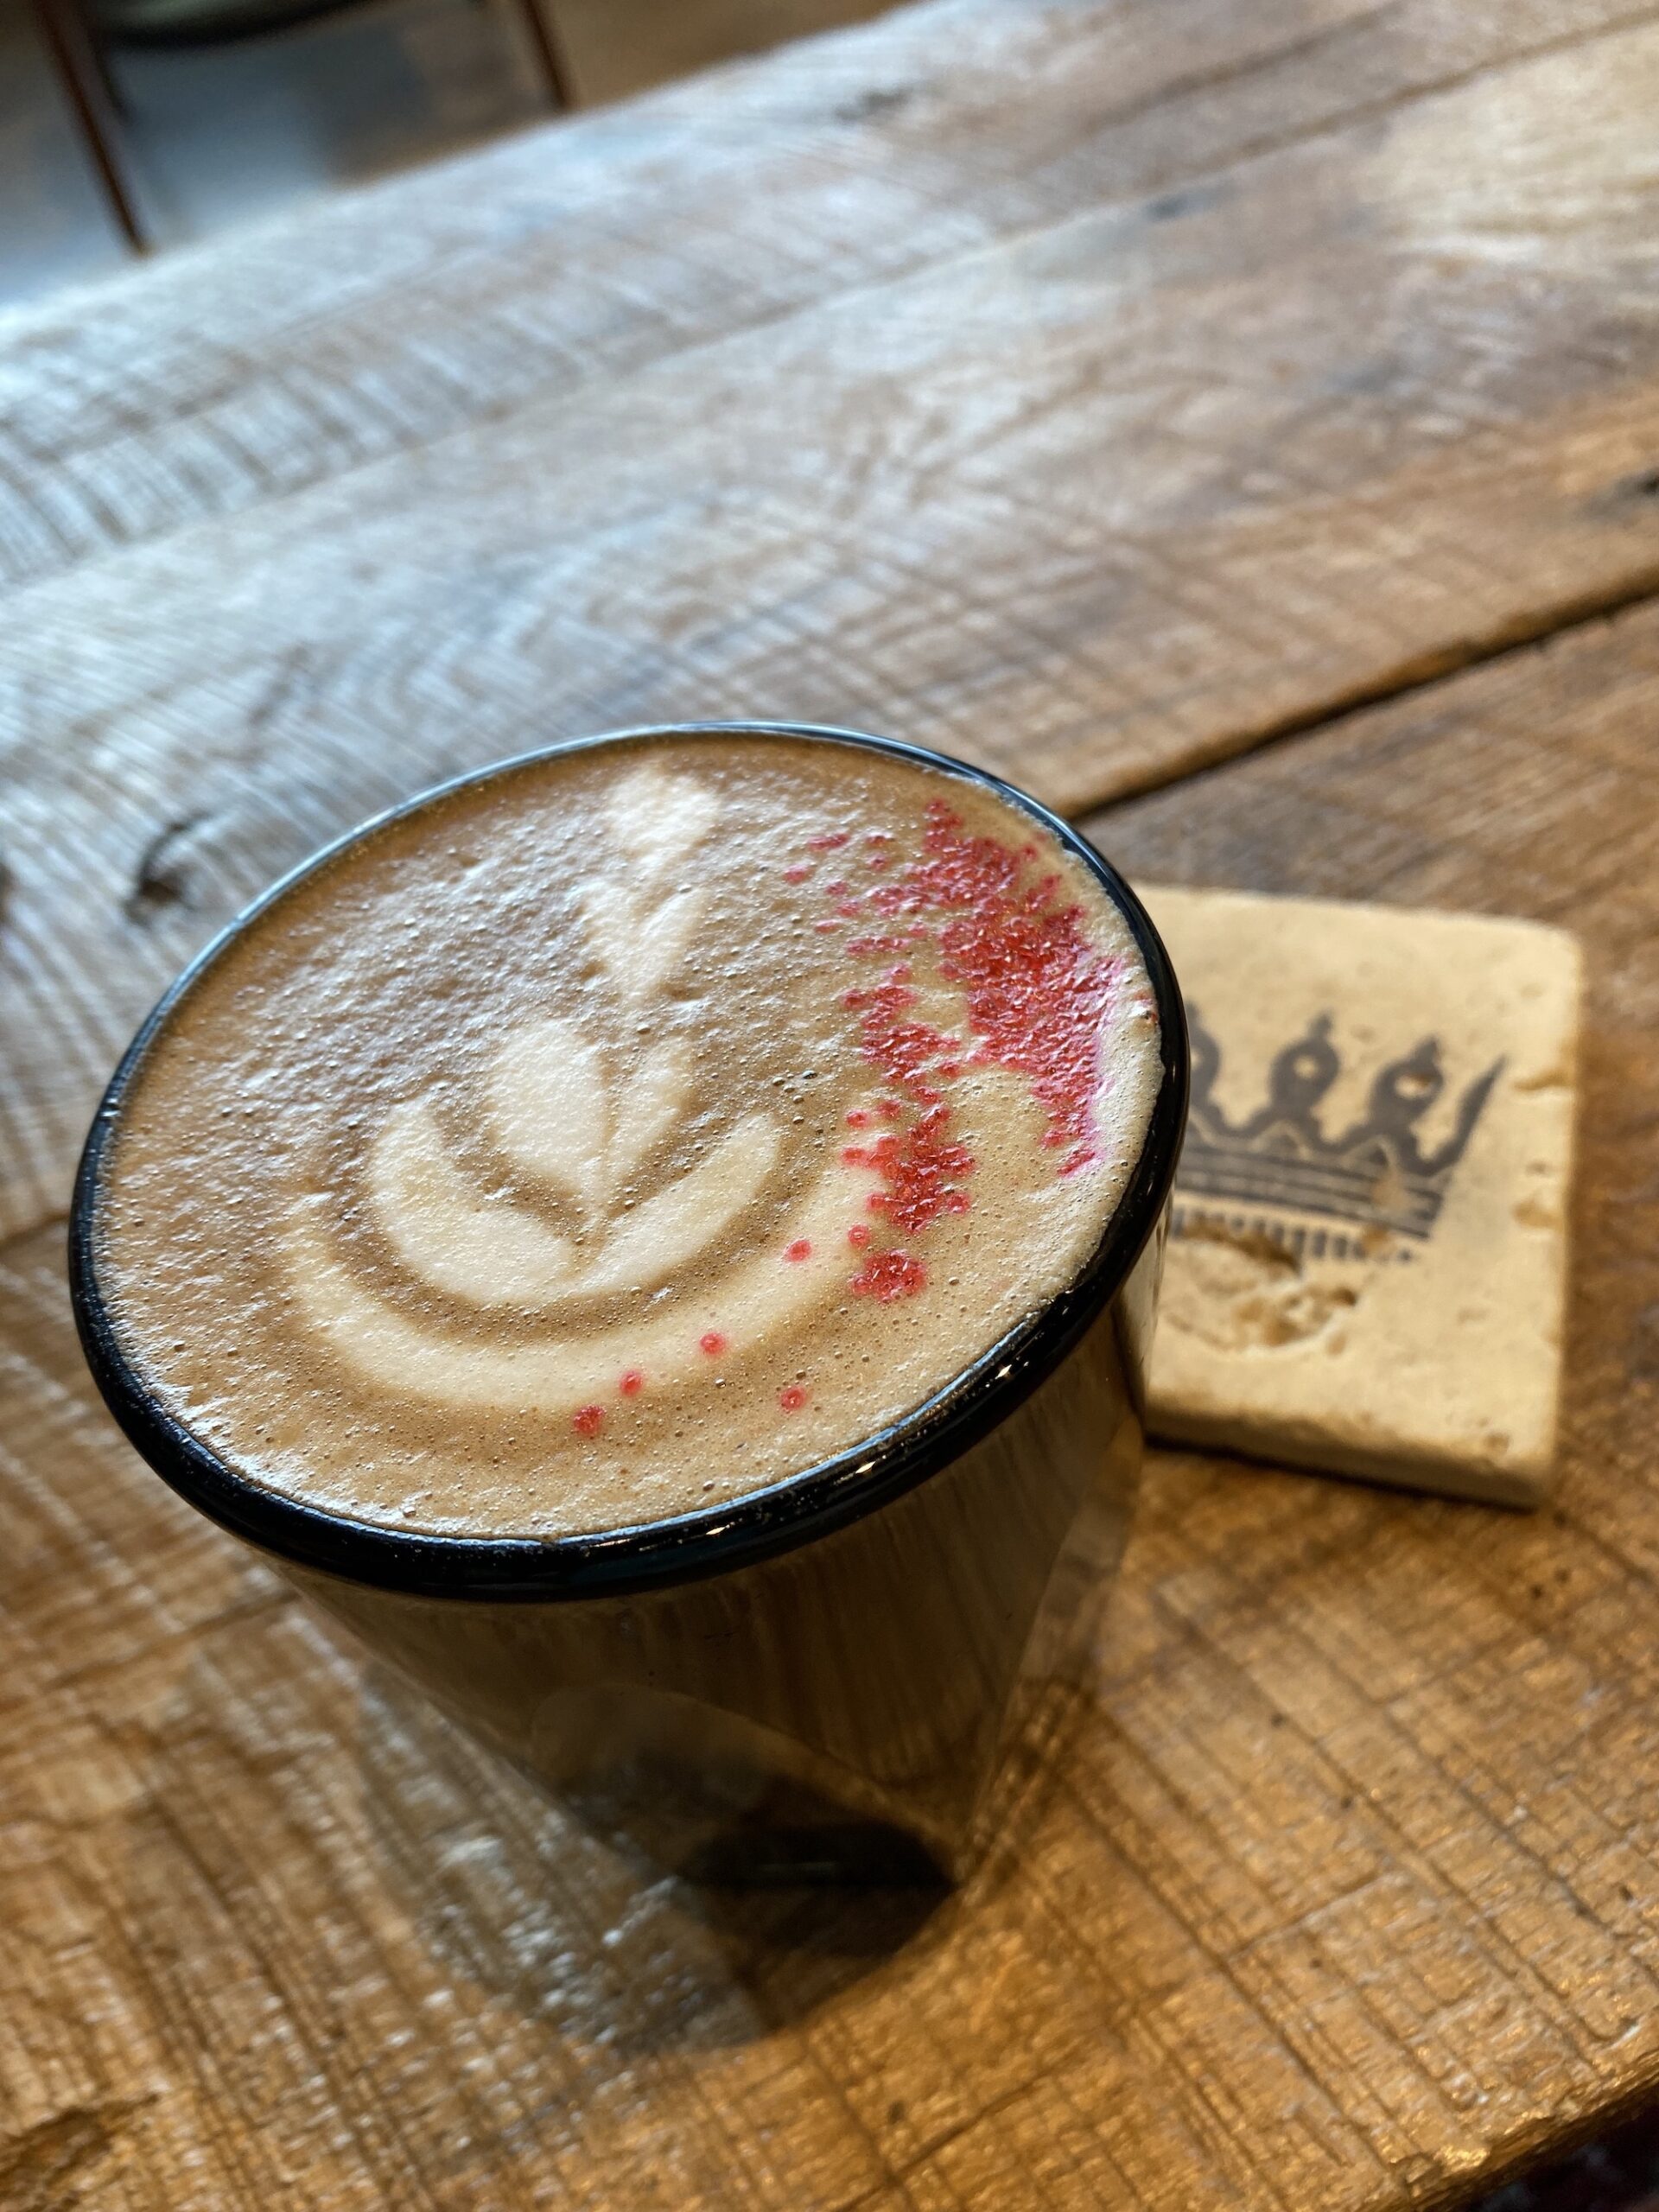 crown-brew-coffee-marion-illinois